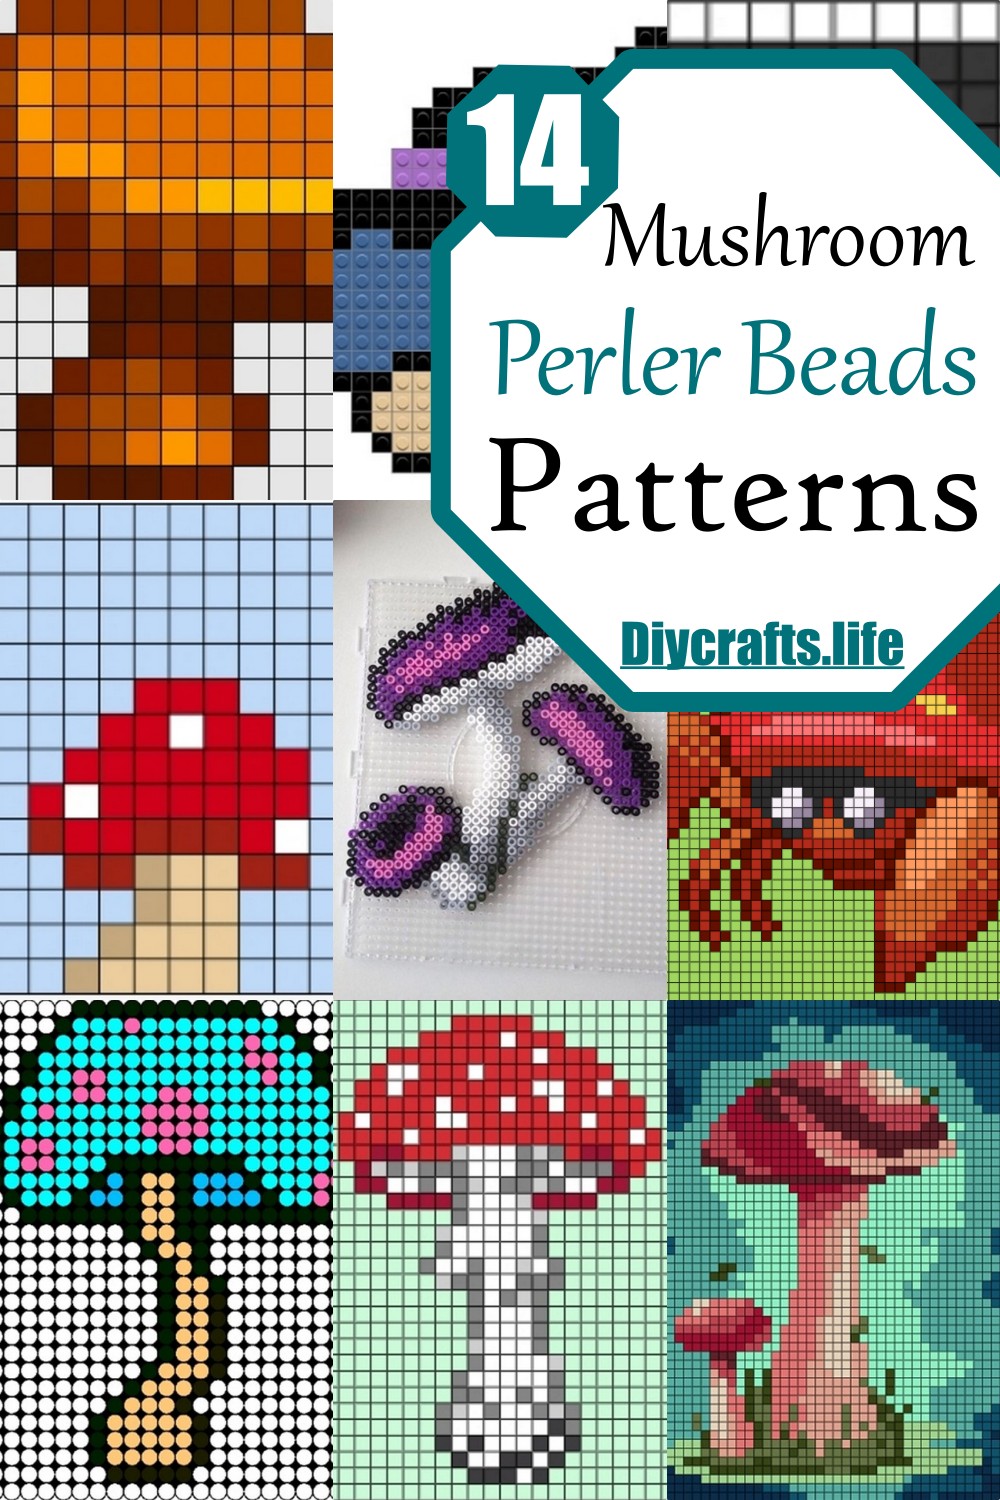 Mushroom Perler Beads Patterns